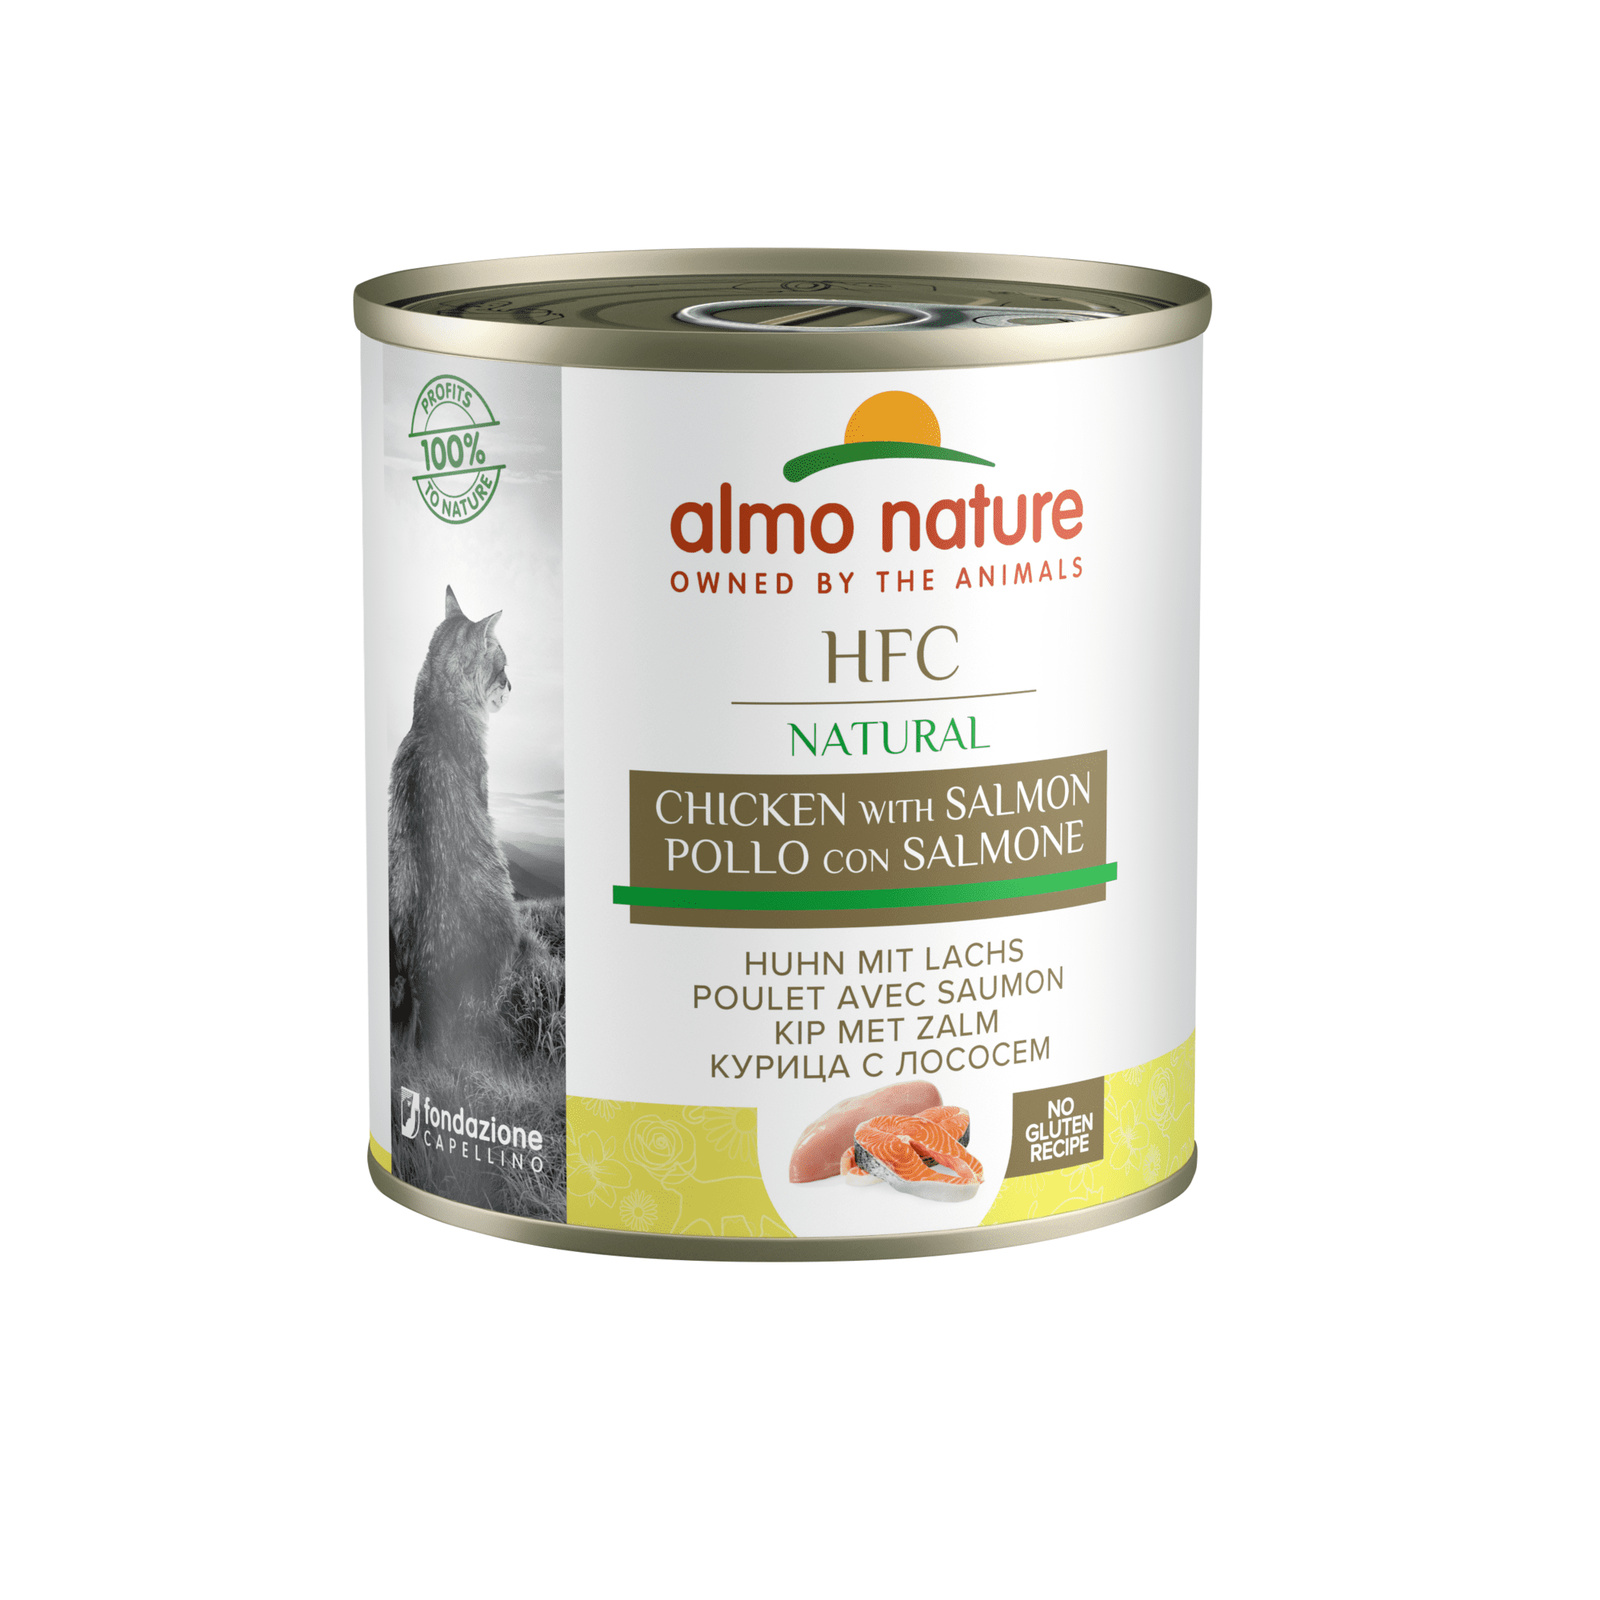 Almo Nature консервы Almo Nature консервы для кошек, с лососем и курицей (3,36 кг) almo nature консервы almo nature консервы для кошек с лососем и курицей 3 36 кг